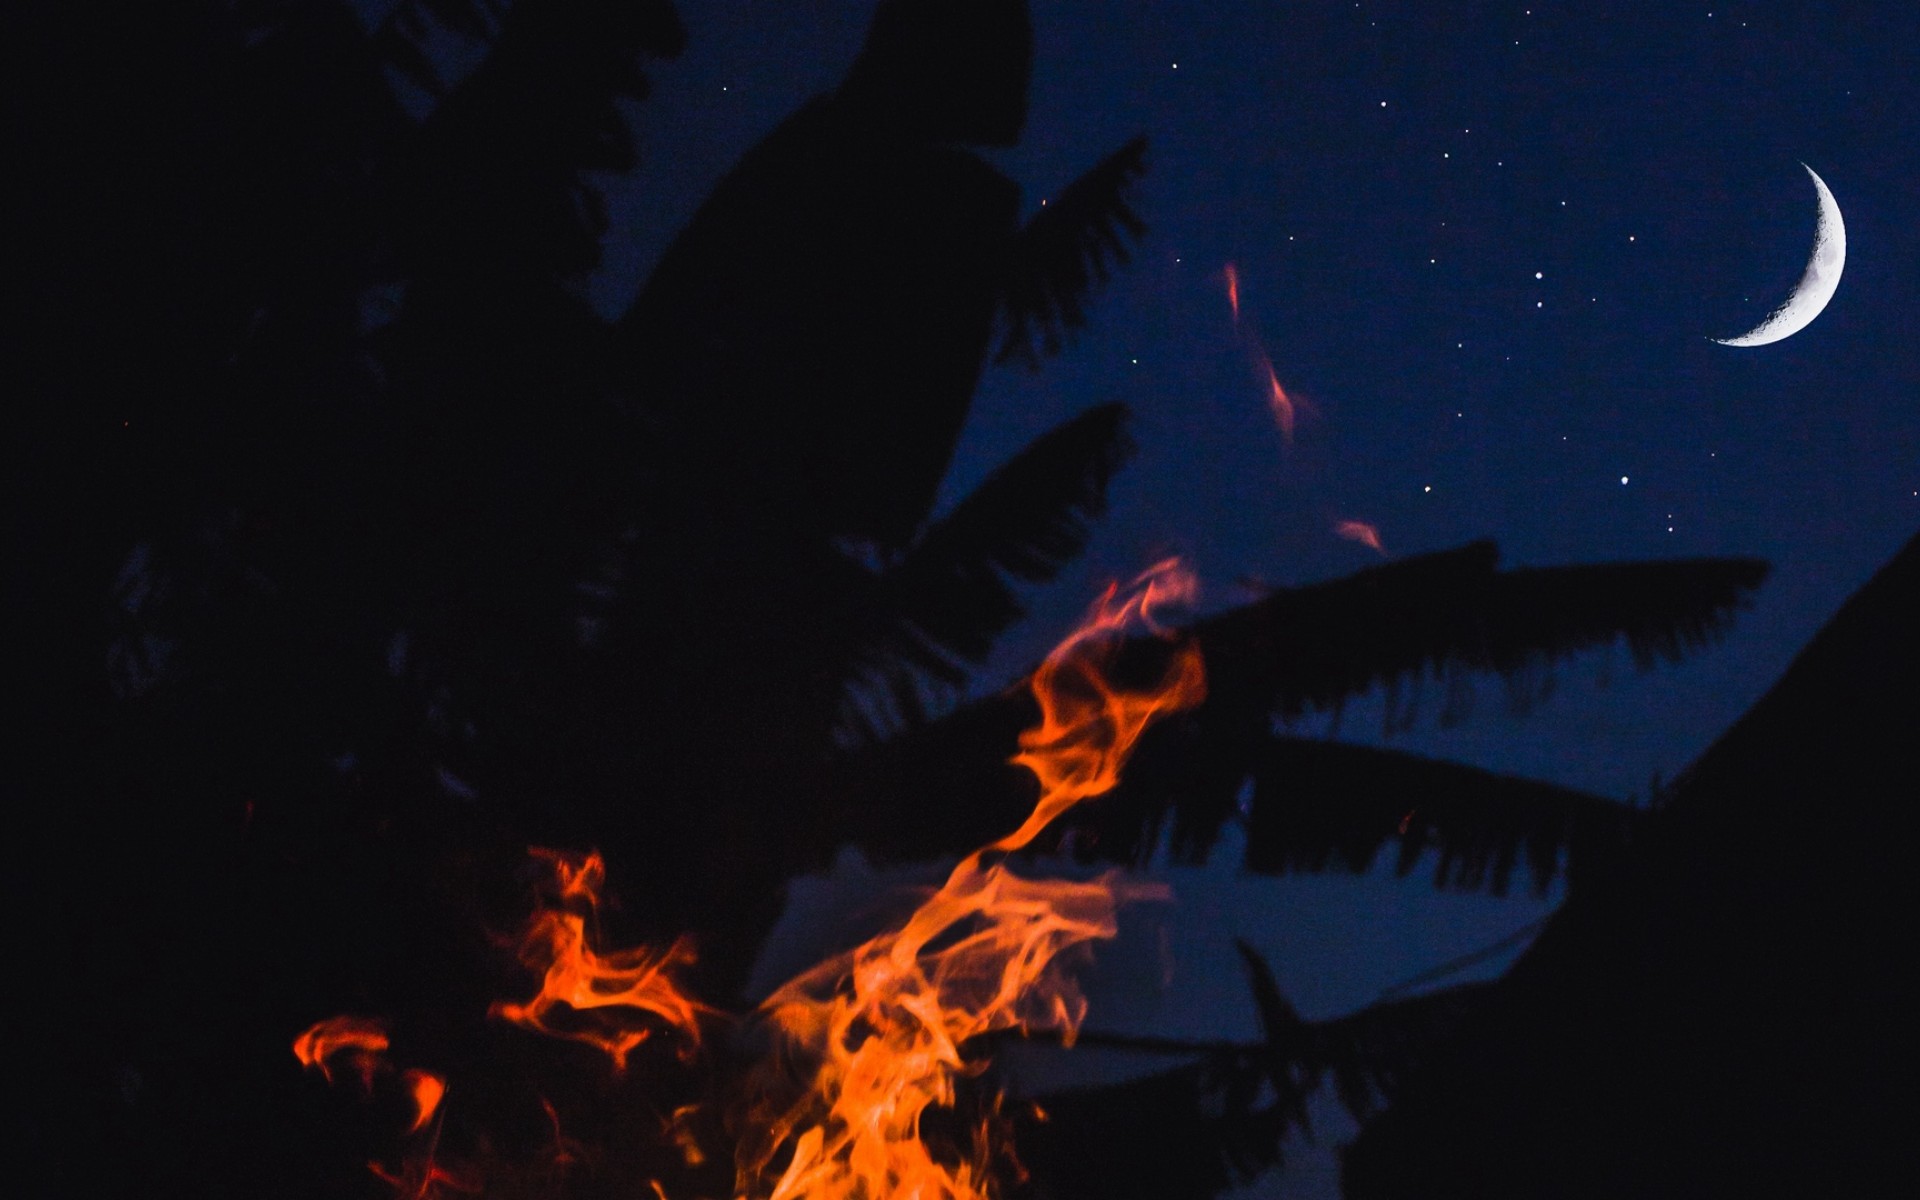 Fire burning trees at night HD Wallpaper